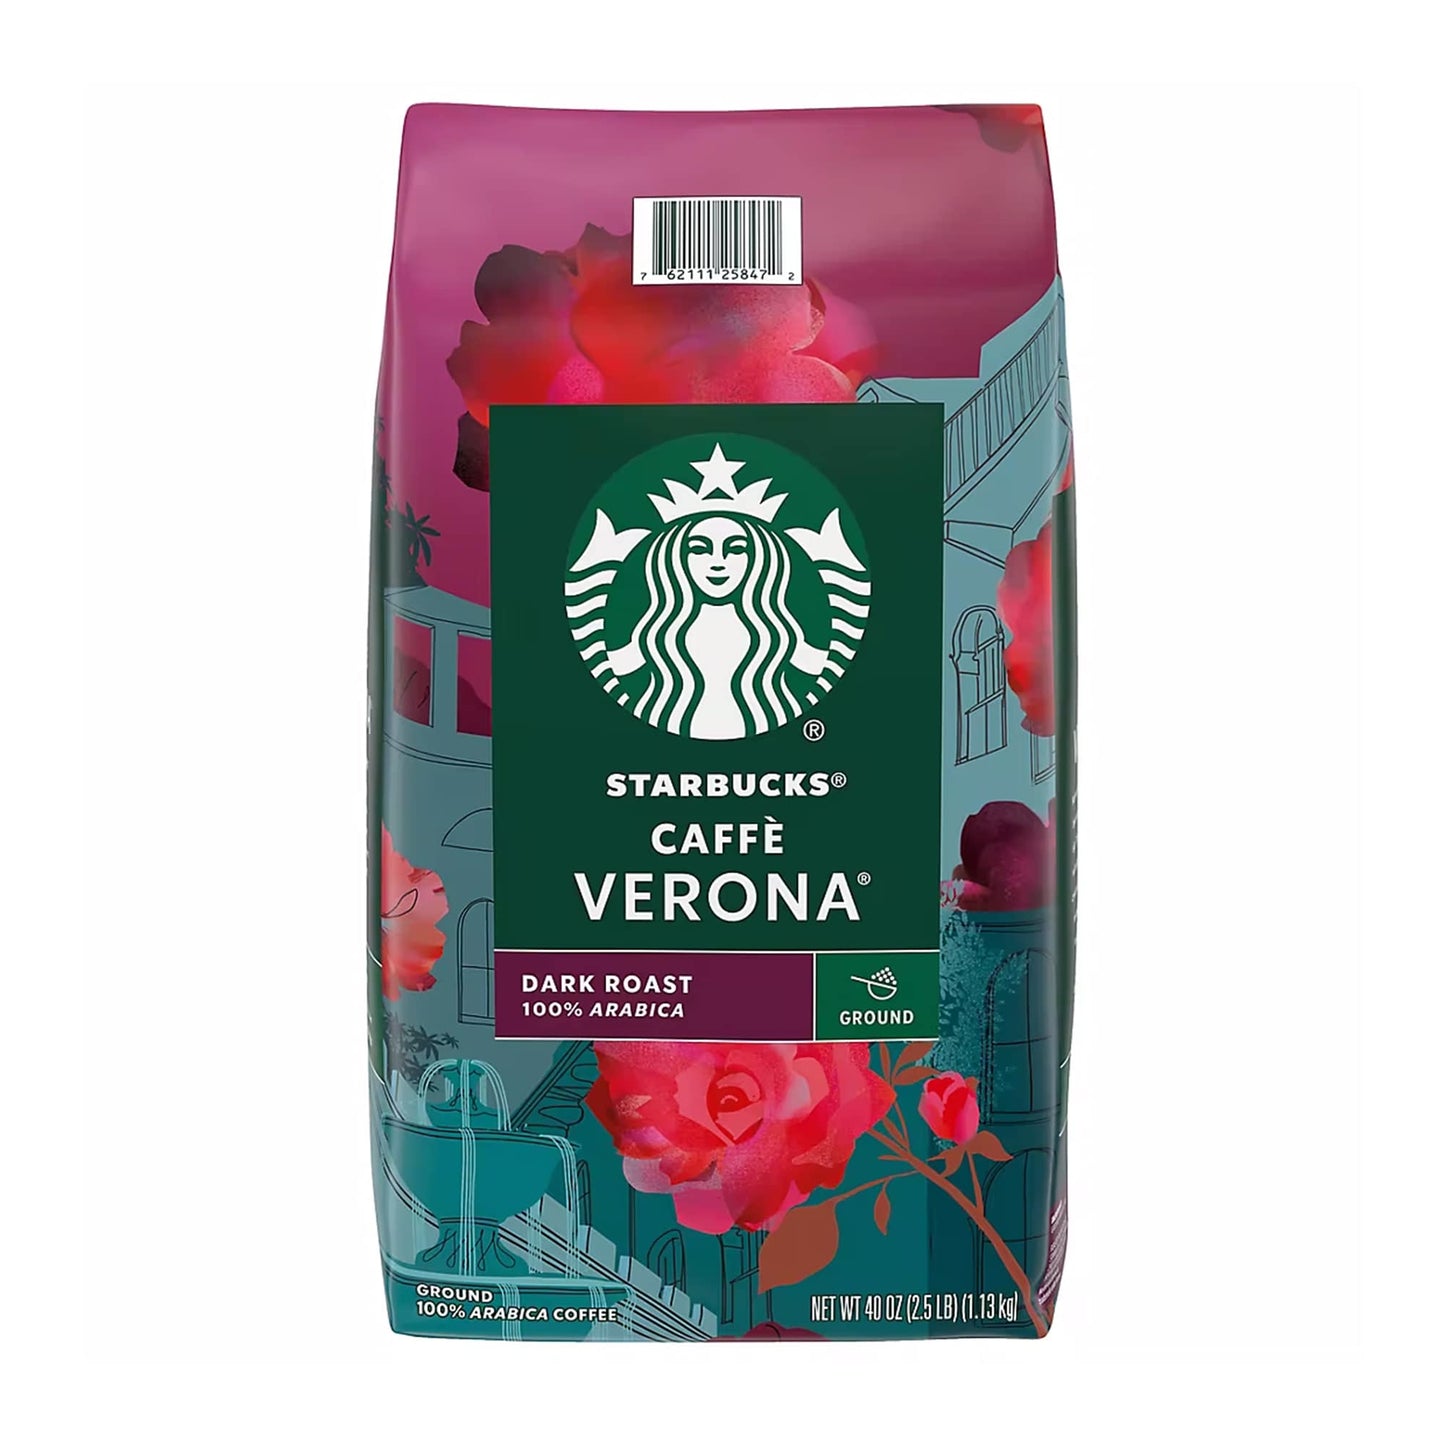 Starbucks Verona Dark Roast Ground Coffee, 40 oz.-0